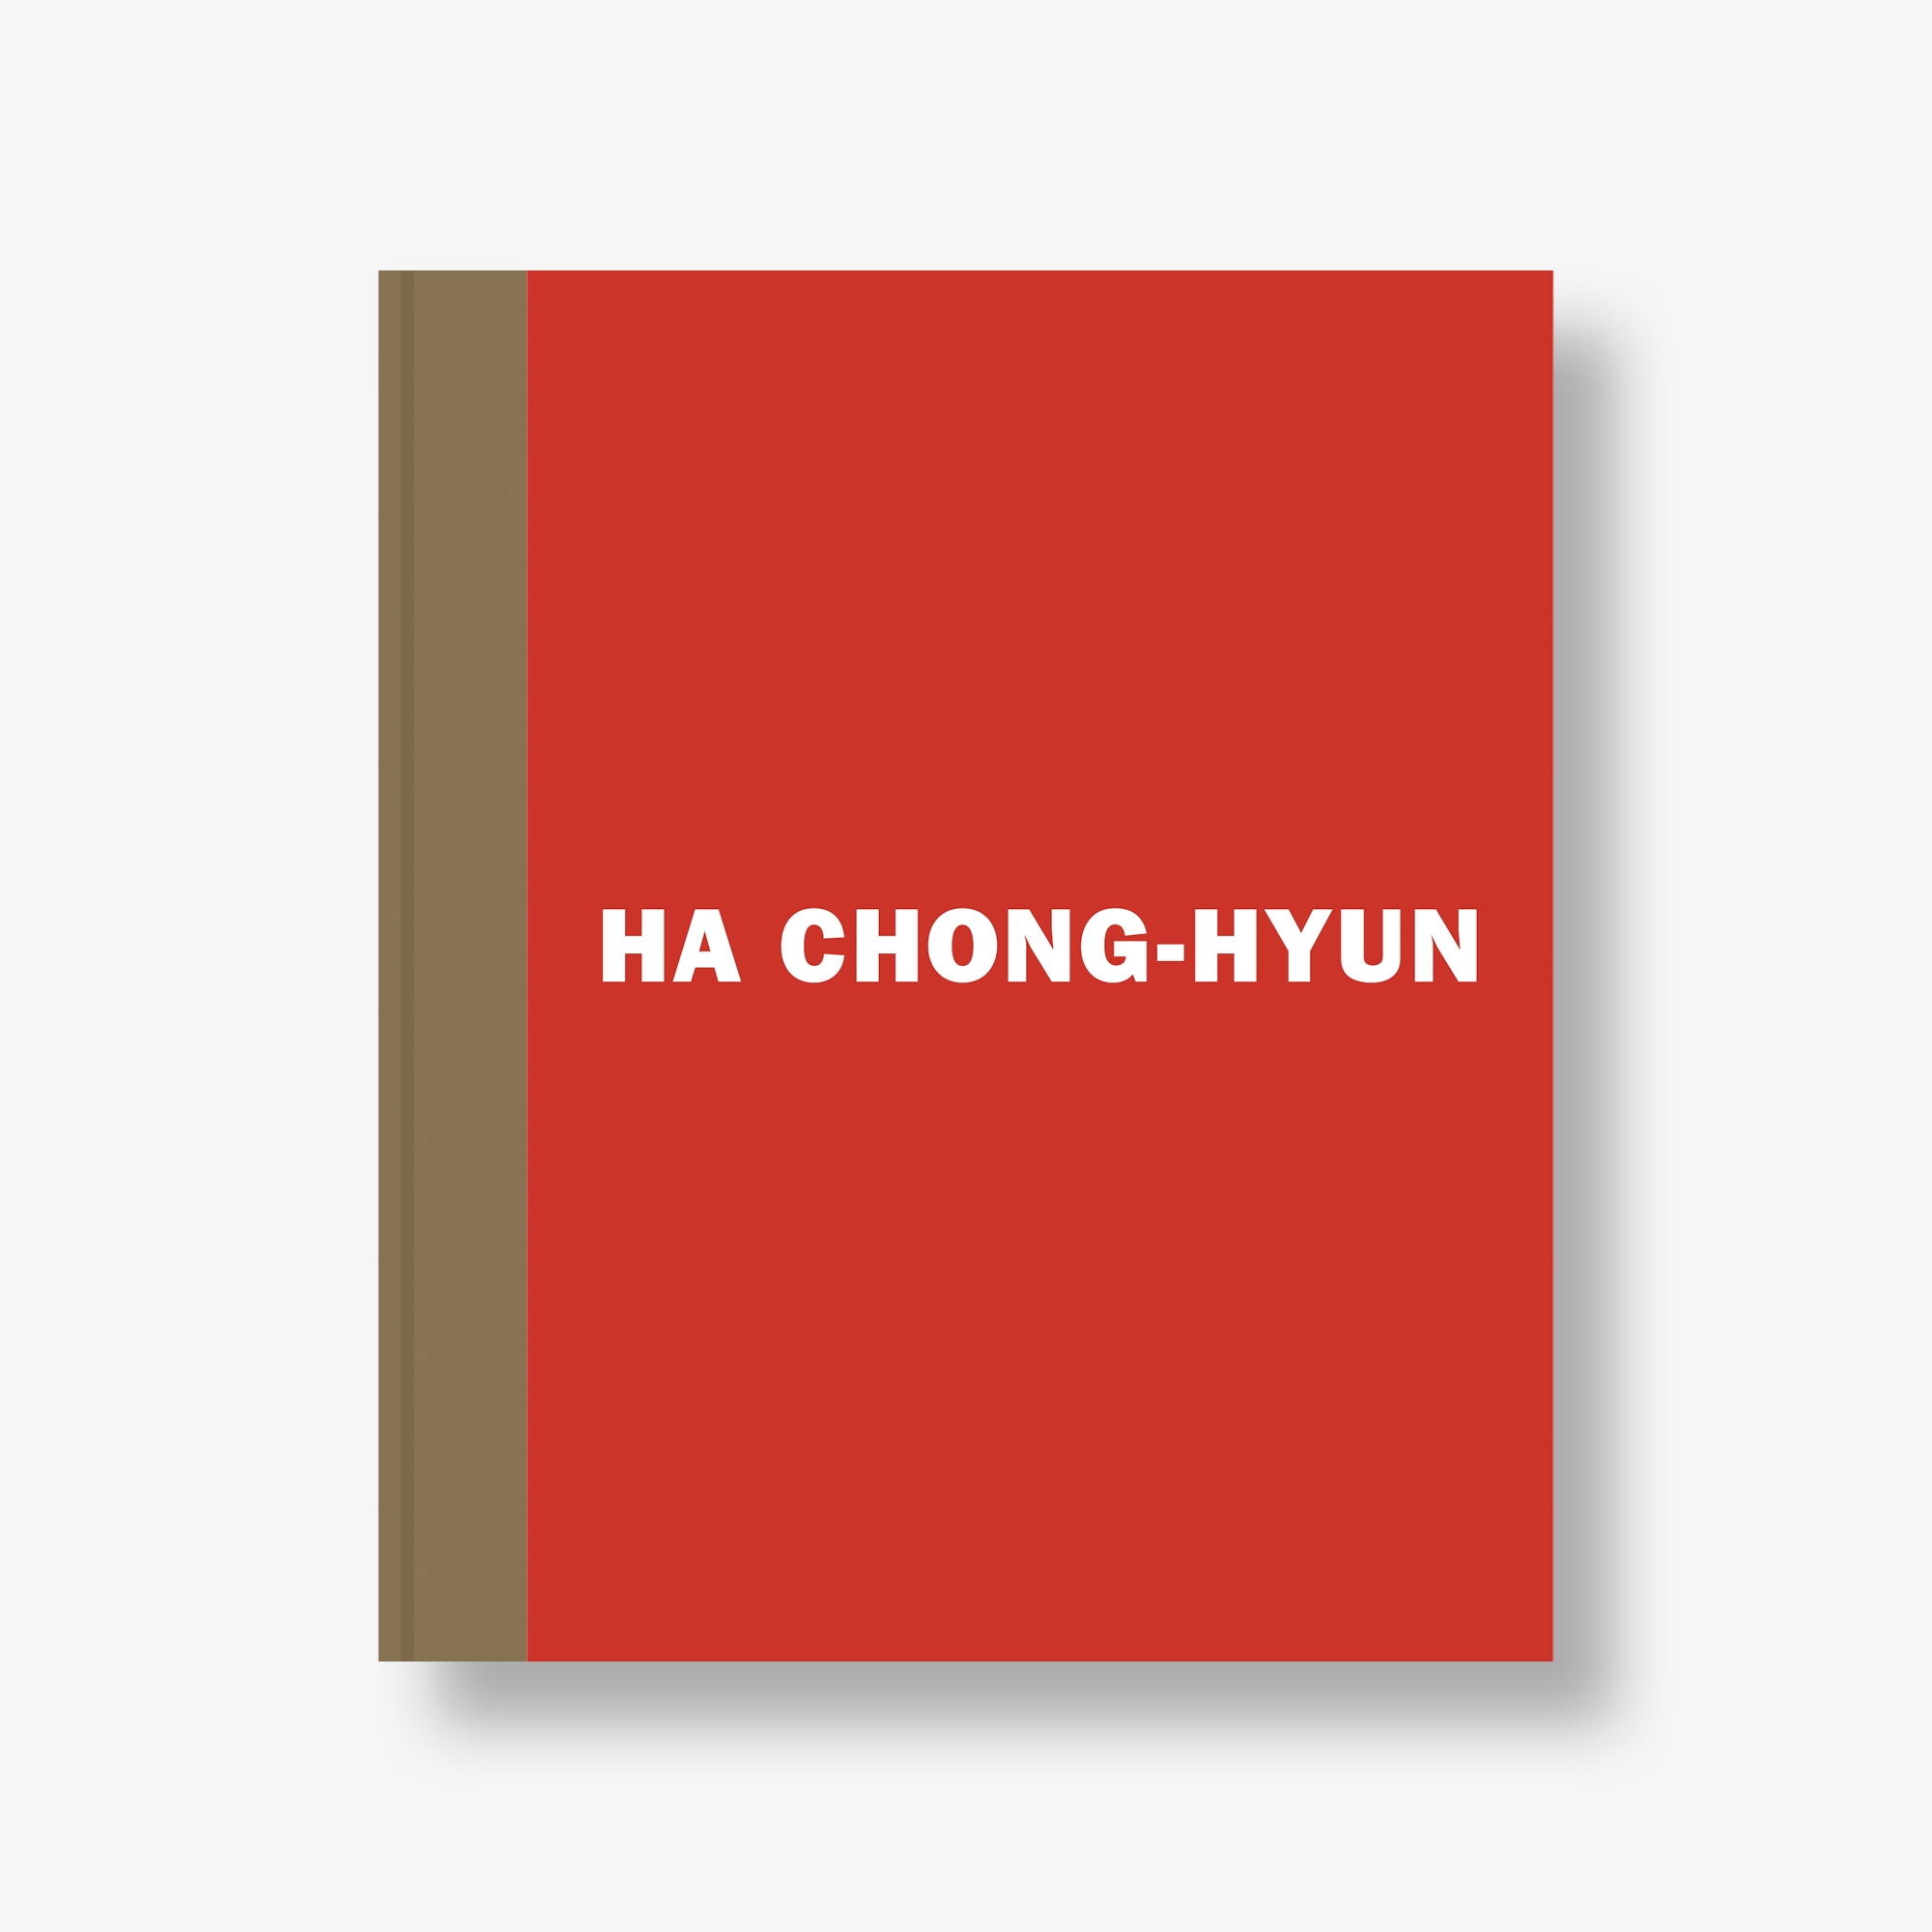 HA CHONG-HYUN